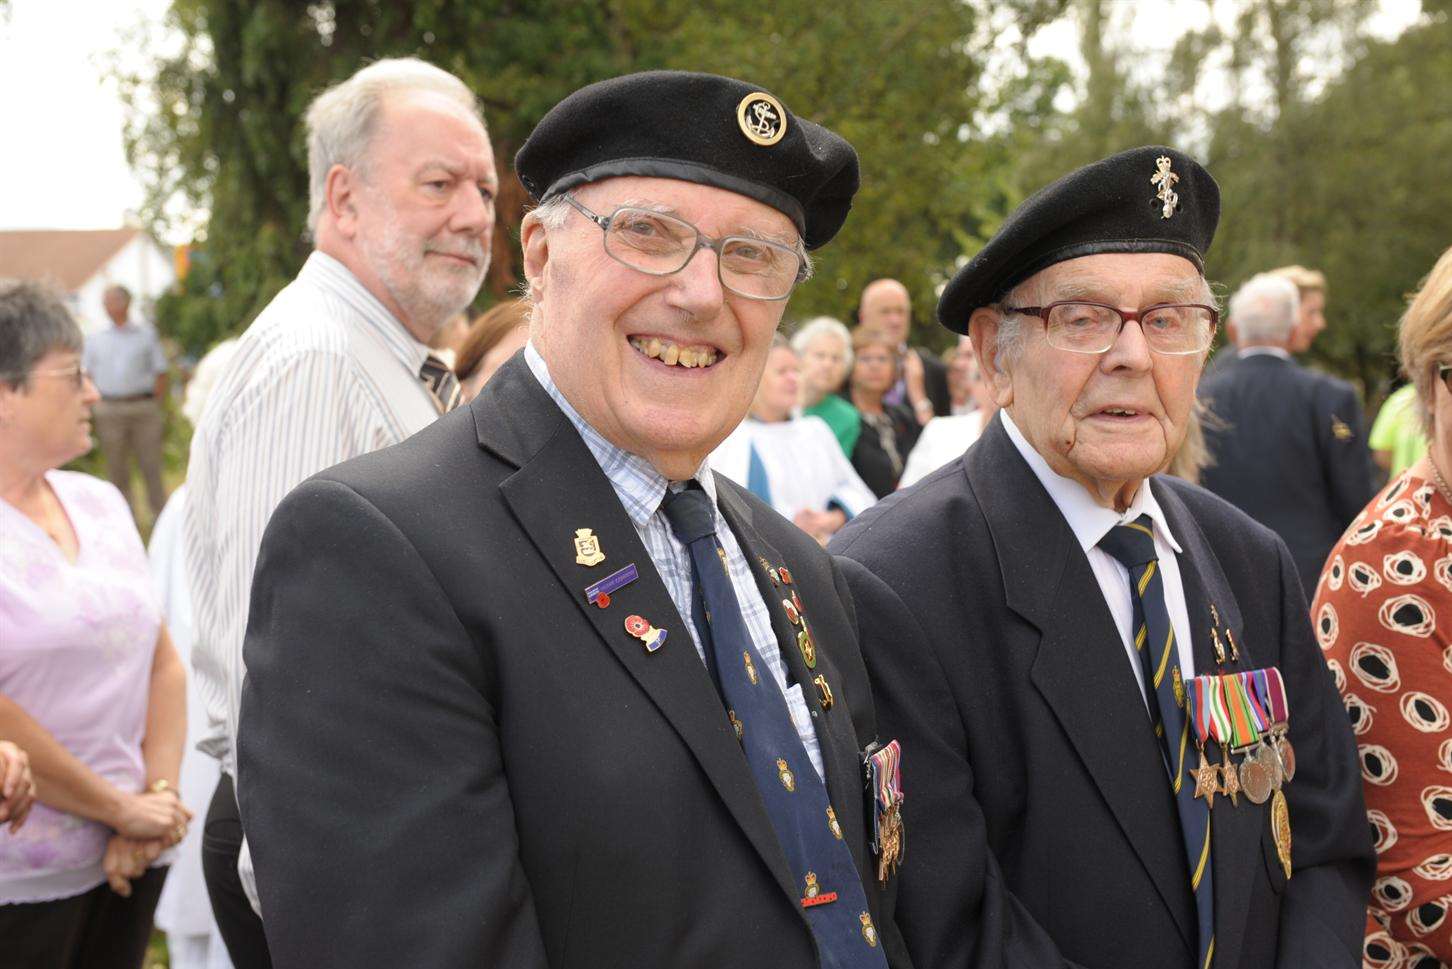 Veterans Edward Needham,89, and Eric Stratford, 93.